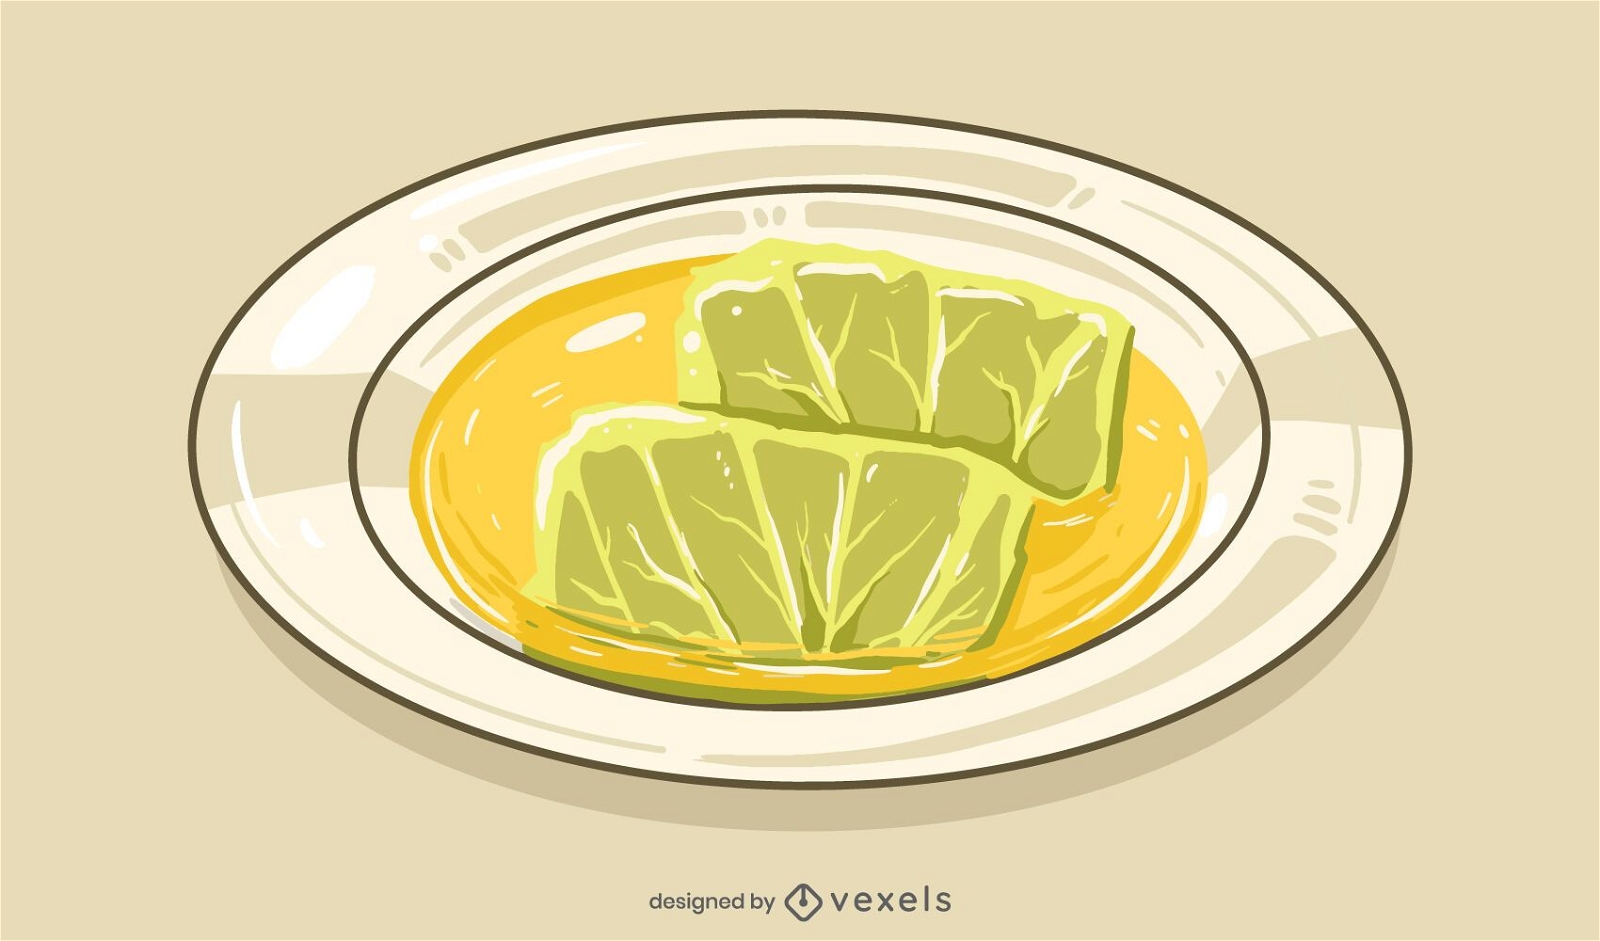 Cabbage roll illustration